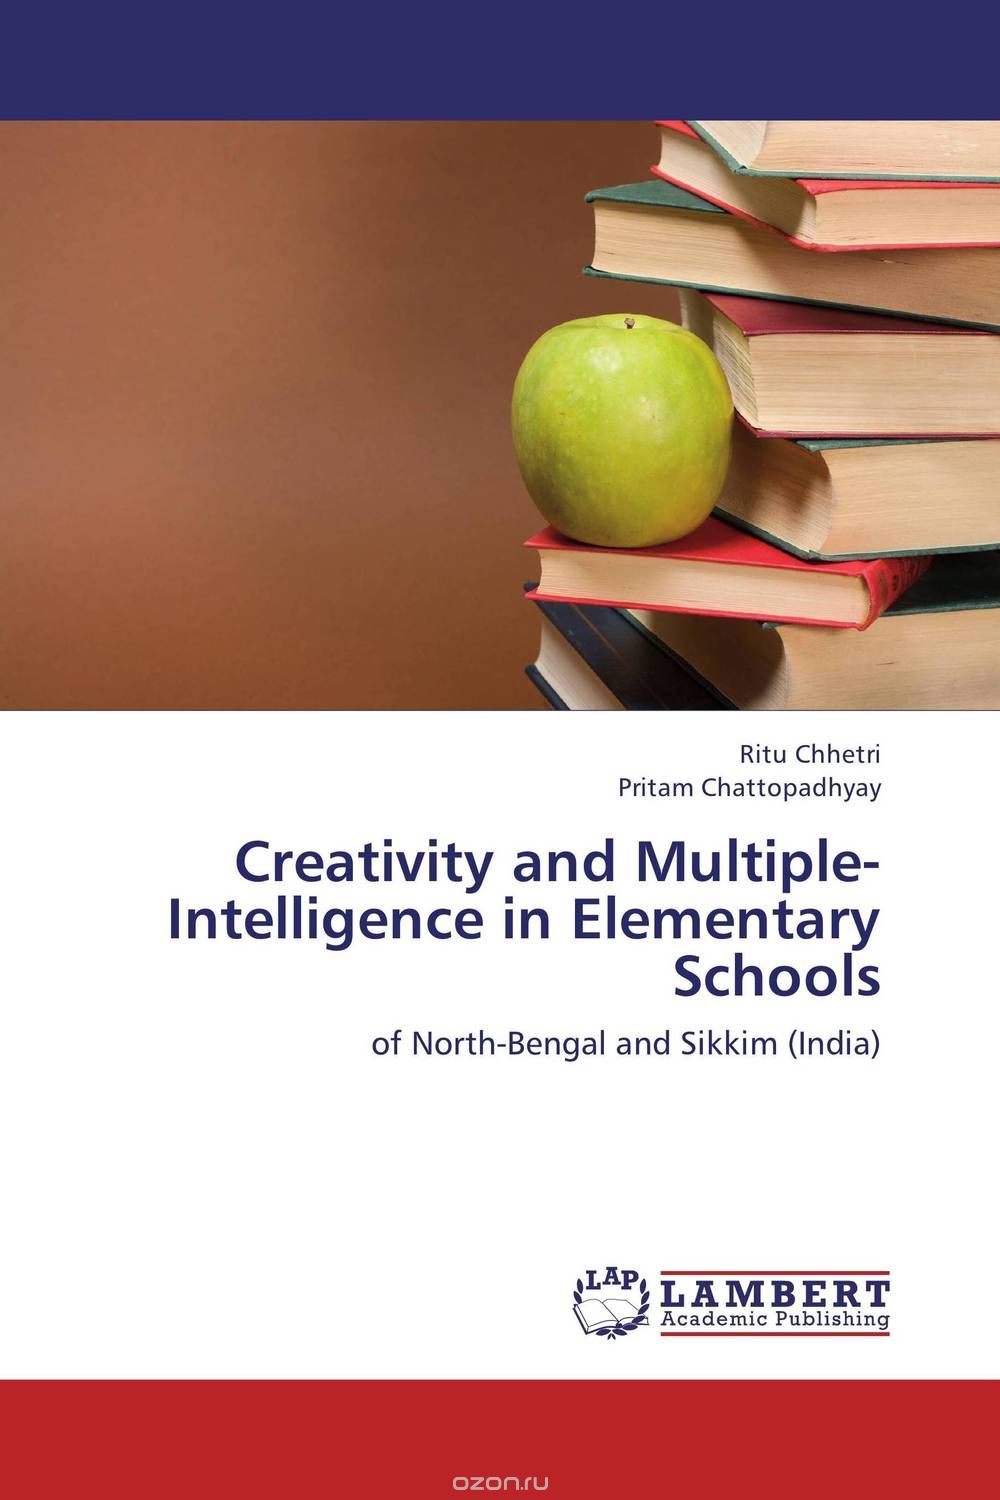 Скачать книгу "Creativity and Multiple-Intelligence in Elementary Schools"